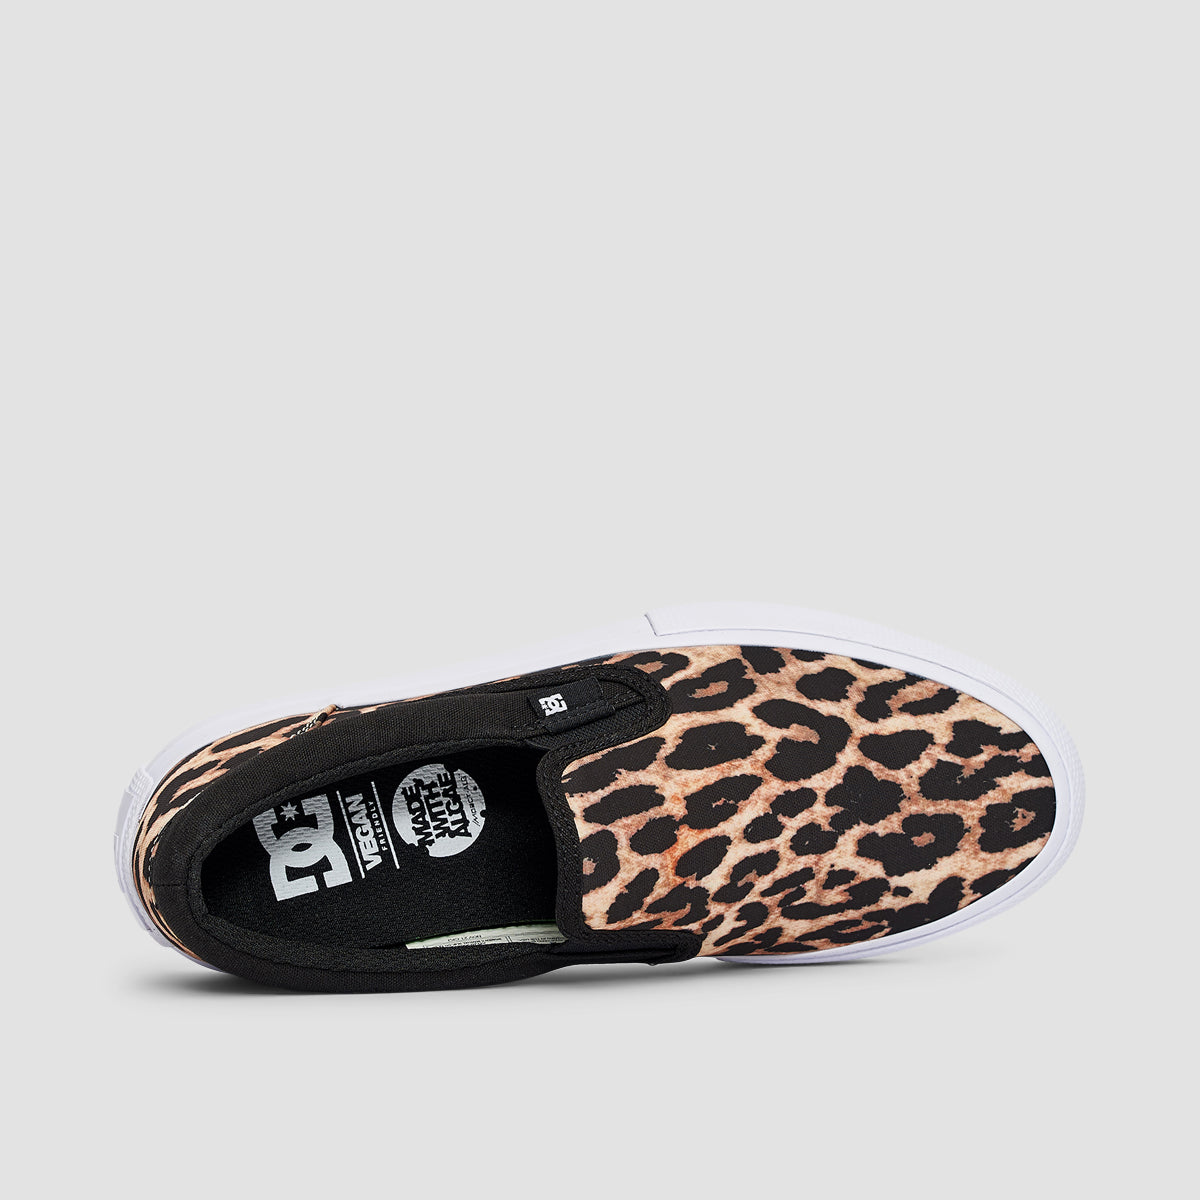 Manual - Slip-On Womens DC Shoes TXSE - Black/Leopard